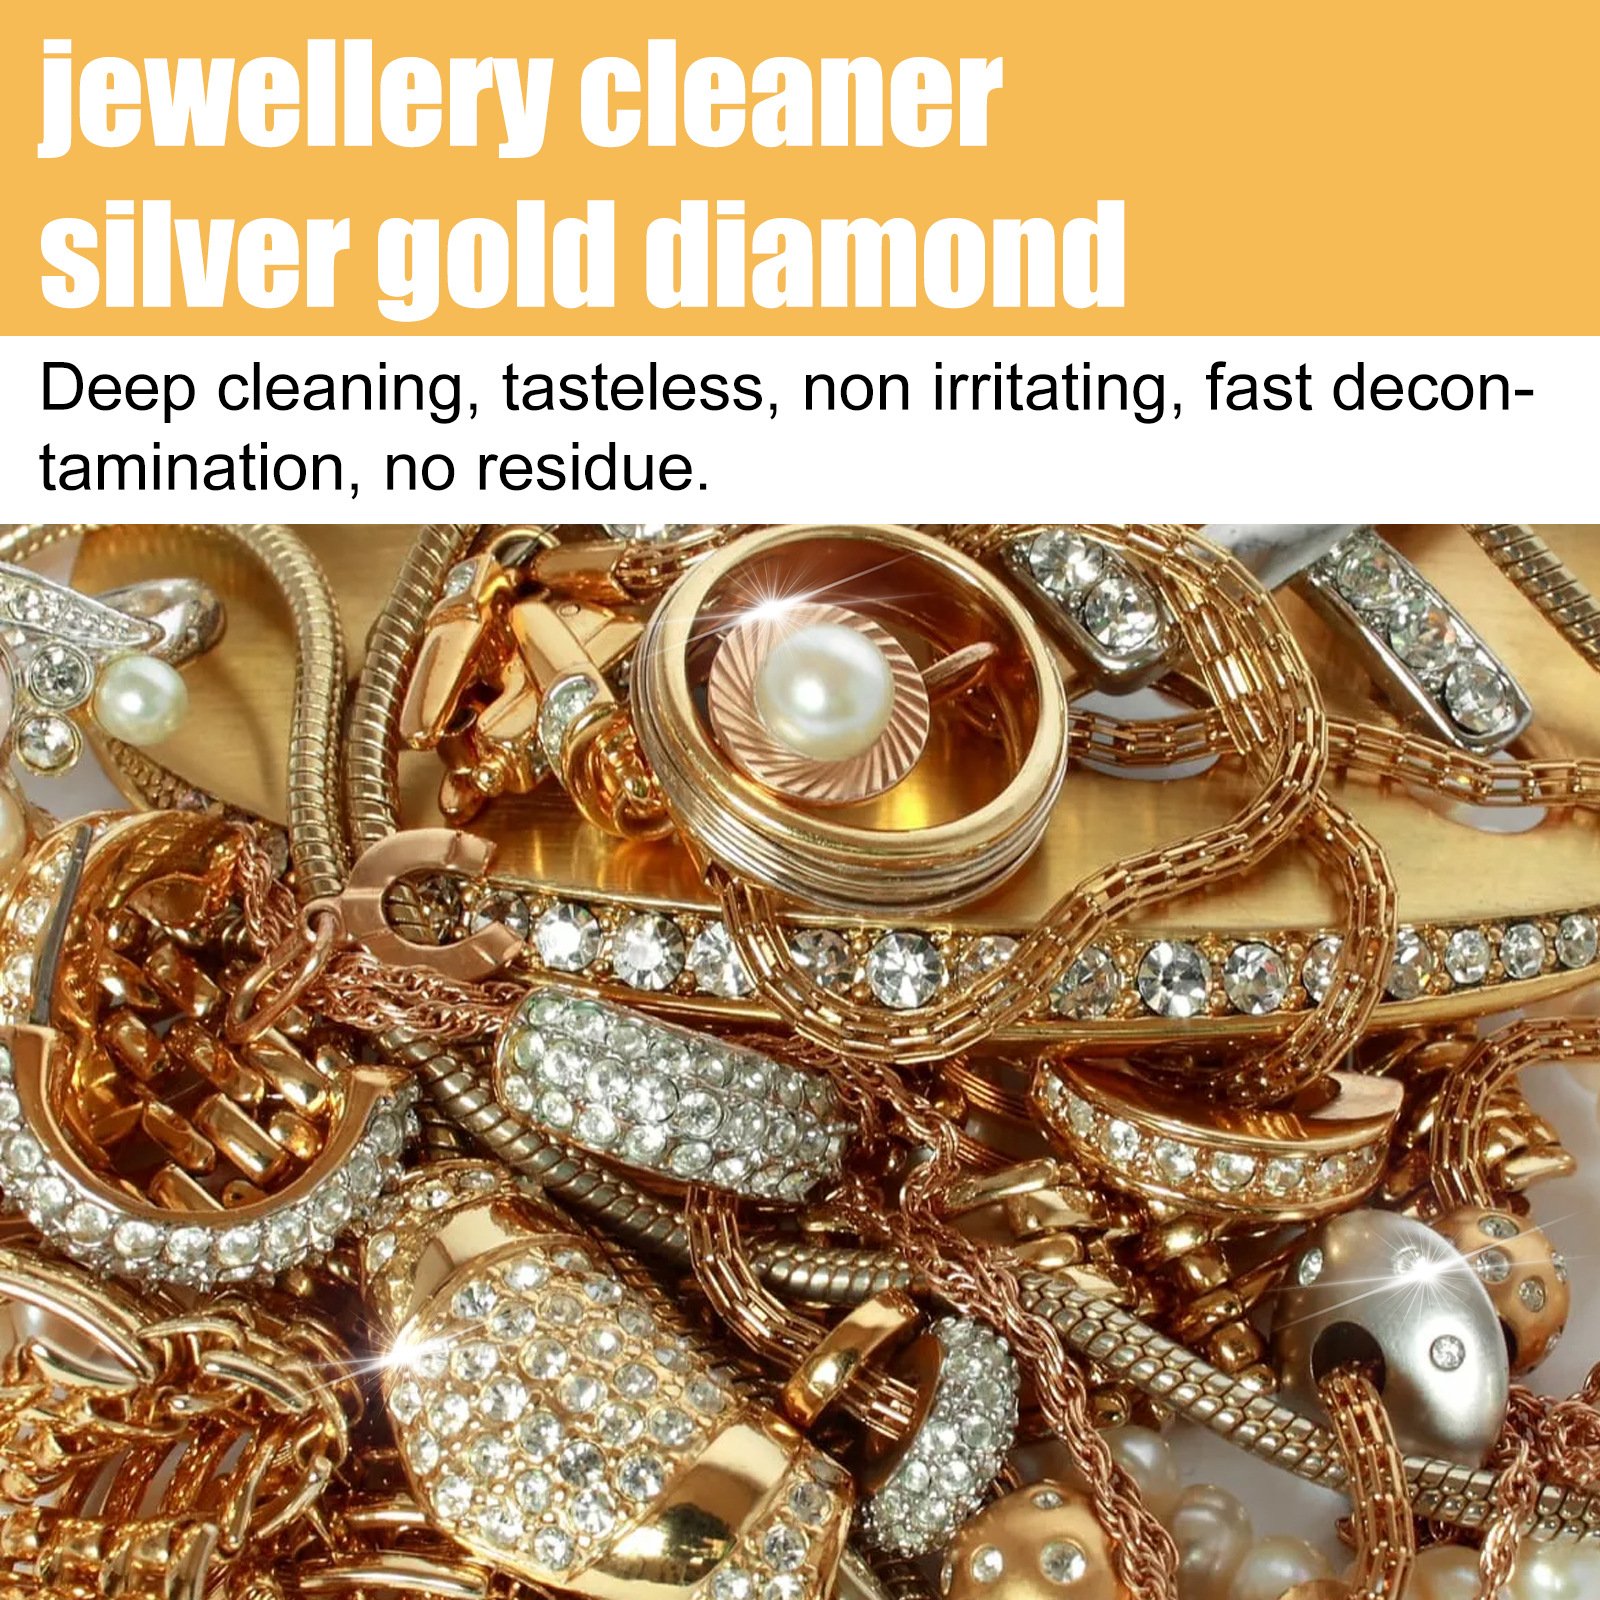 Jewelry cleaner  Jewelry cleaner, Gold cleaner, Cleaning jewelry